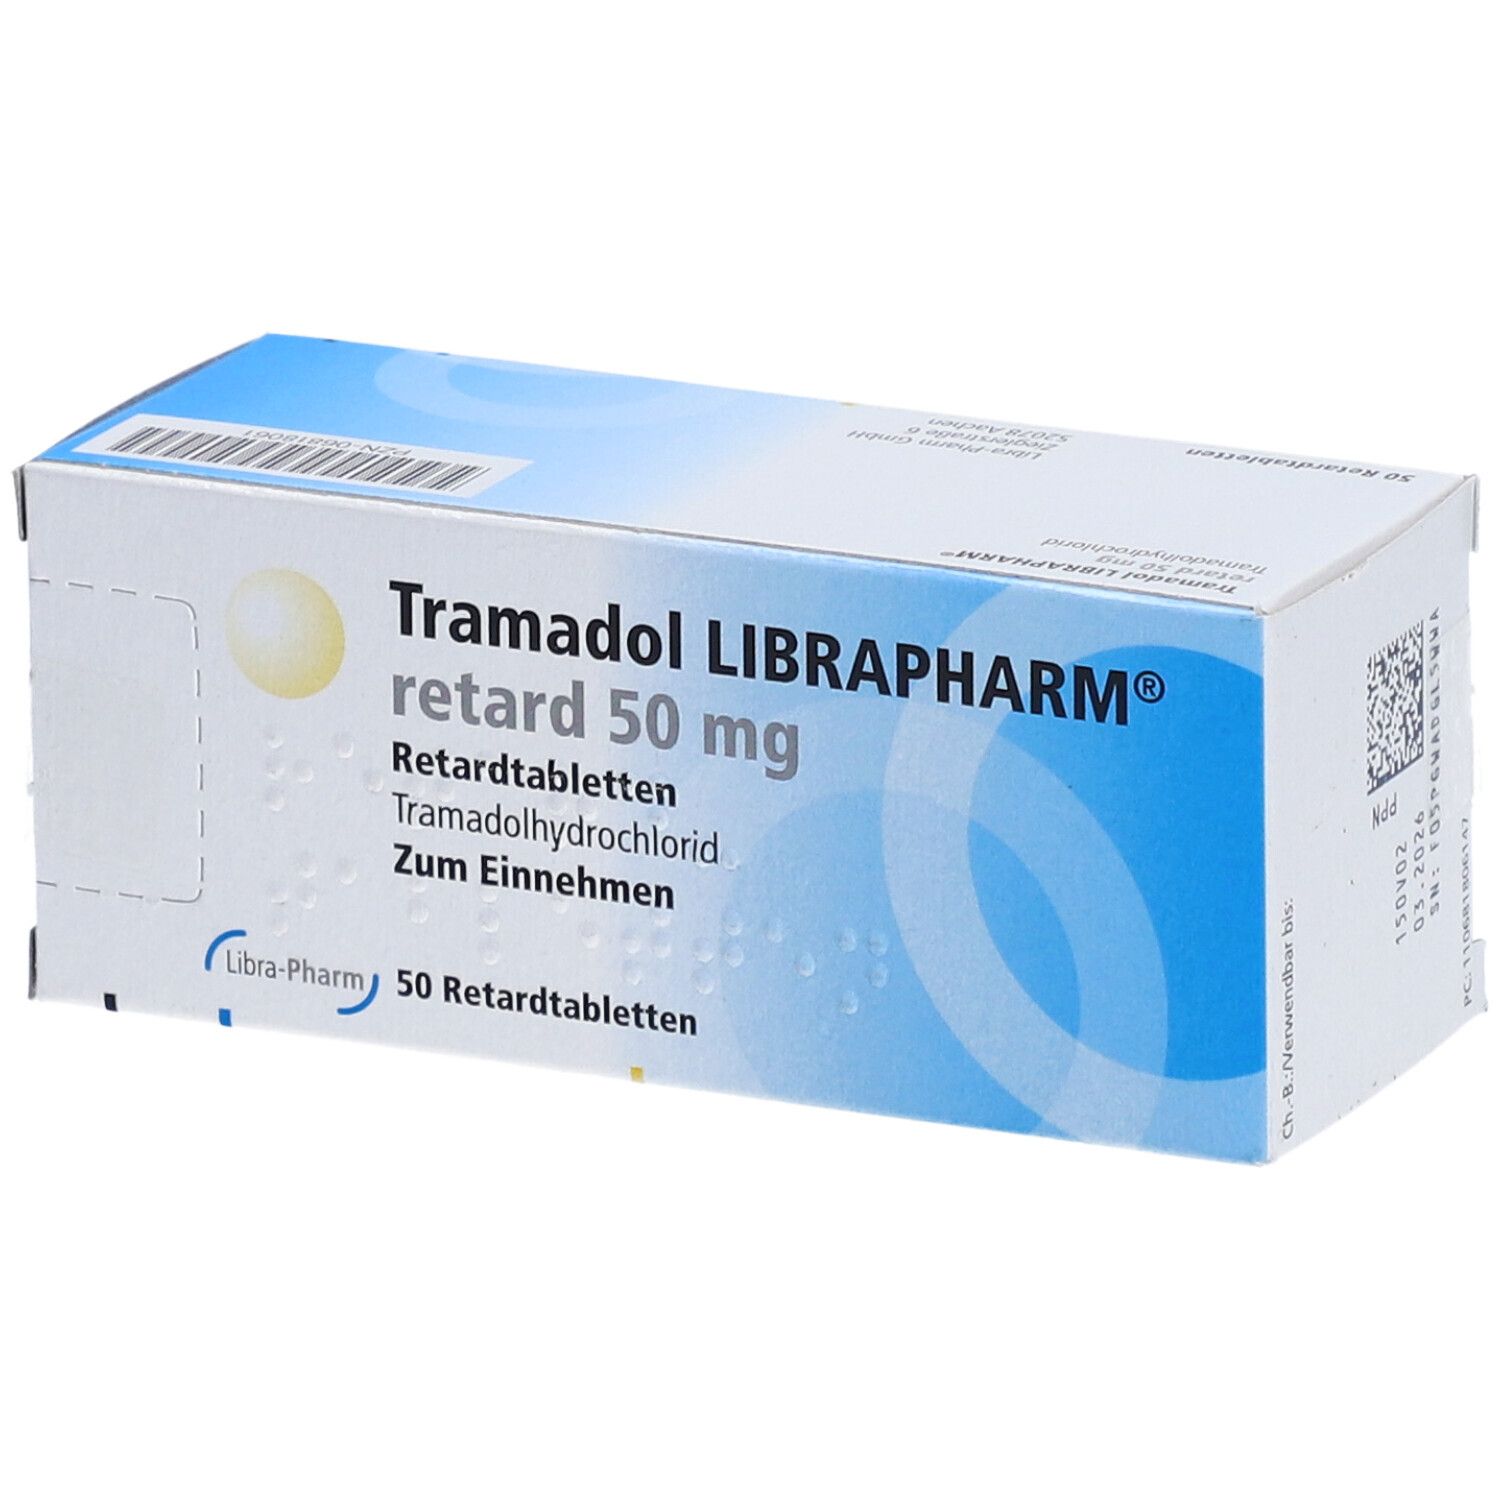 Tramadol LIBRAPHARM® retard 50 mg 50 St - shop-apotheke.com